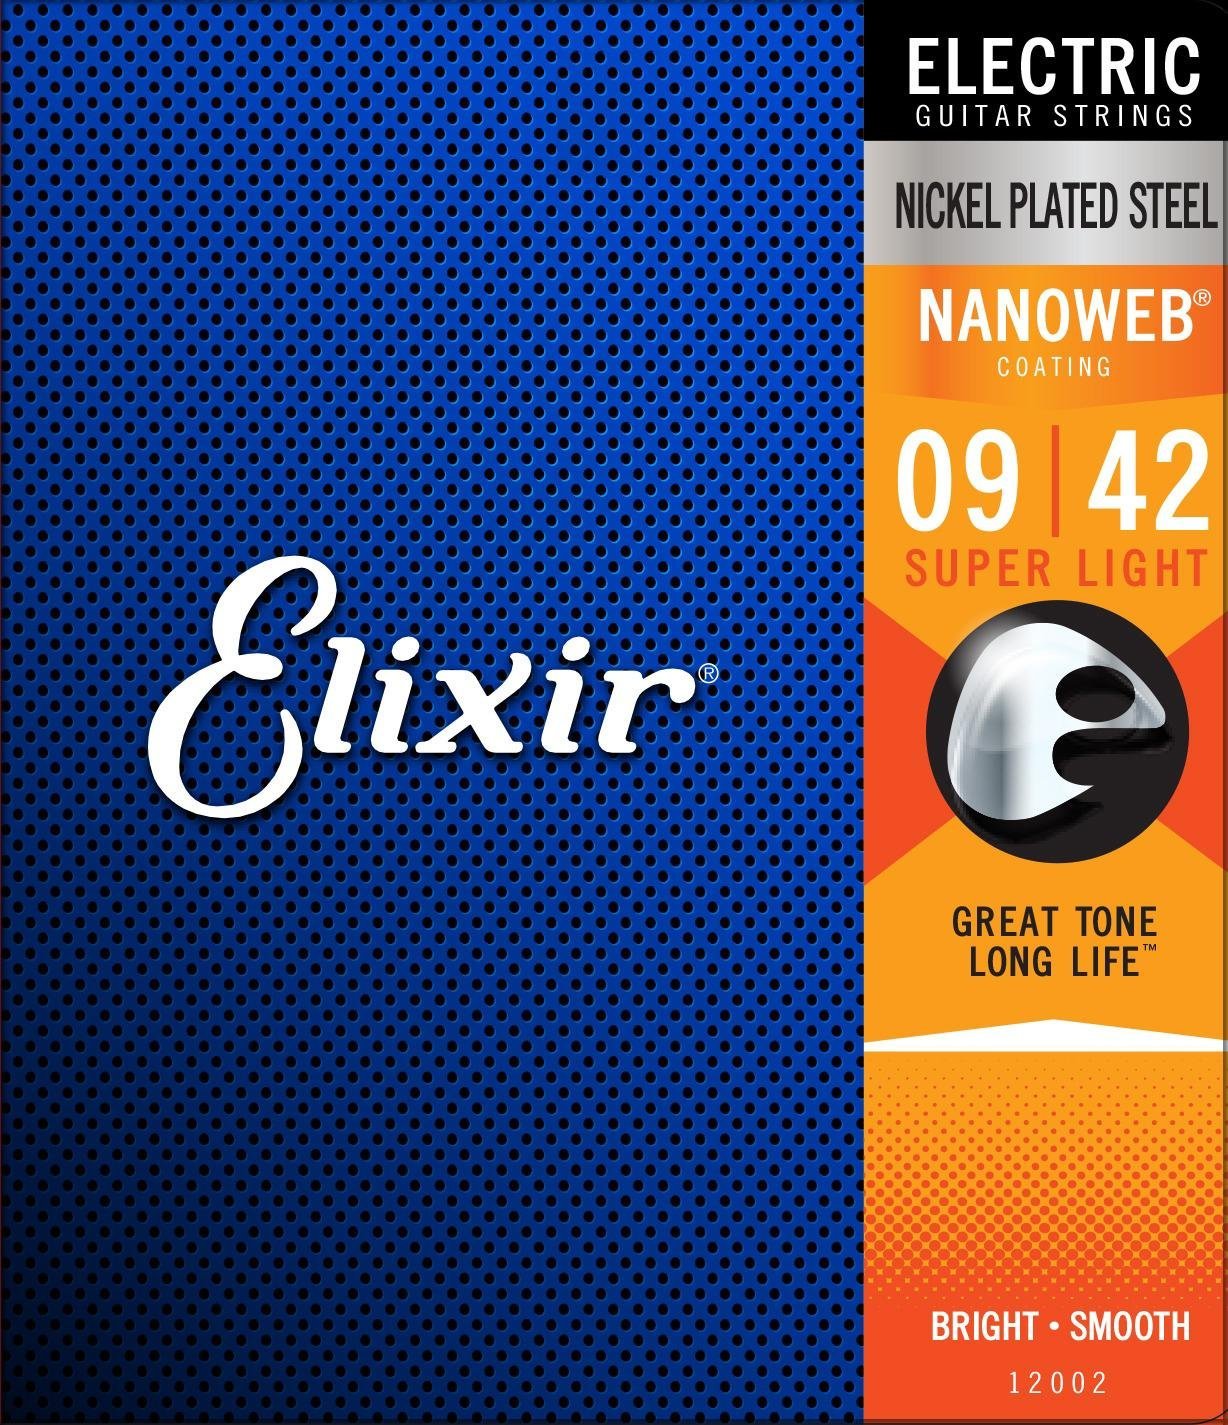 Elixir Electric Nickel Plated Steel Nanoweb Coating Super Light 09-42